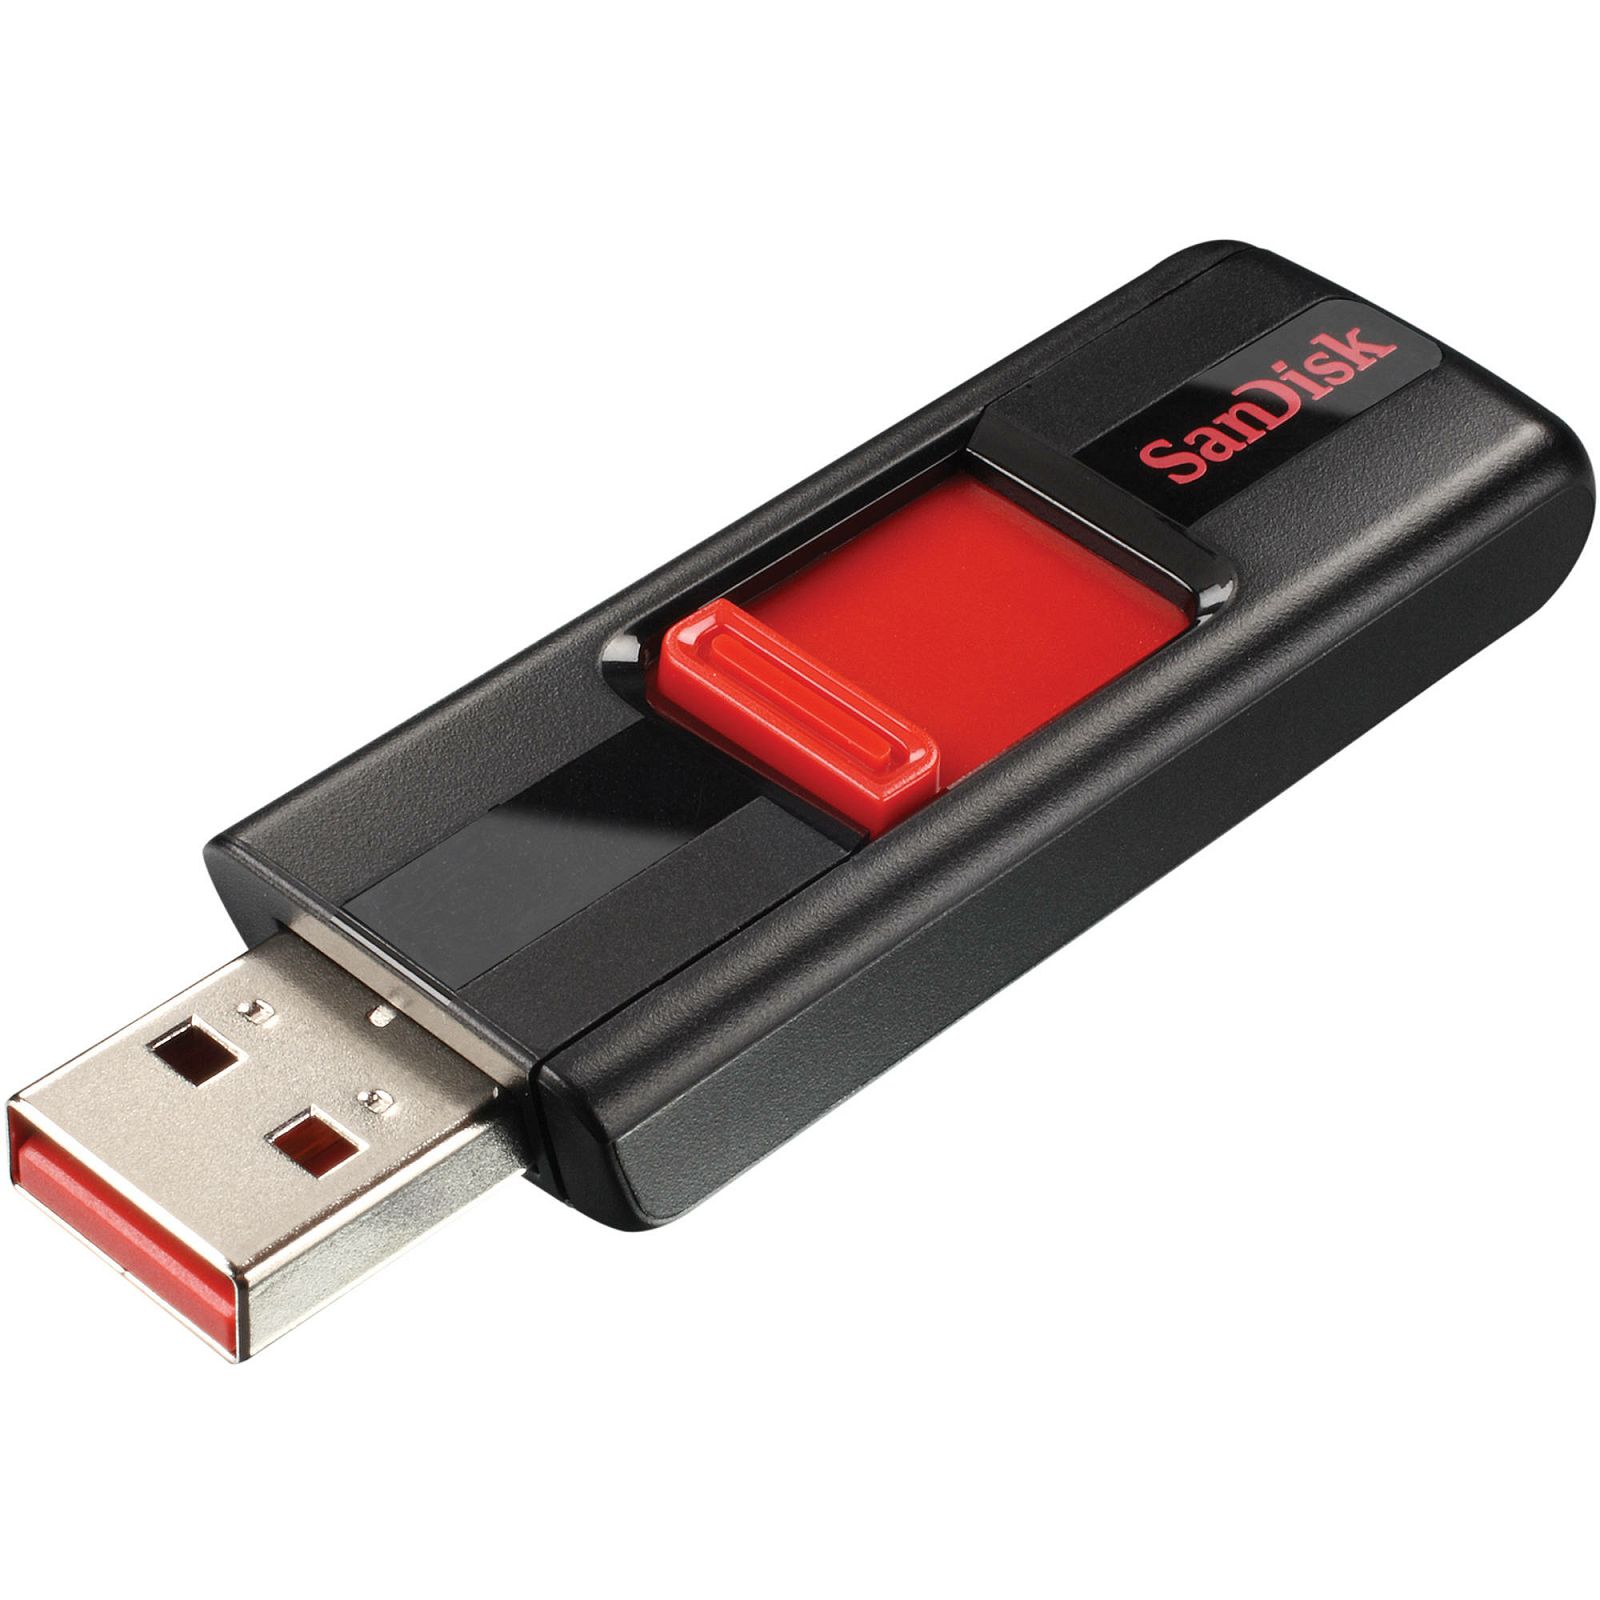 SanDisk Cruzer 8GB SDCZ36-008G-B35 USB Memory Stick